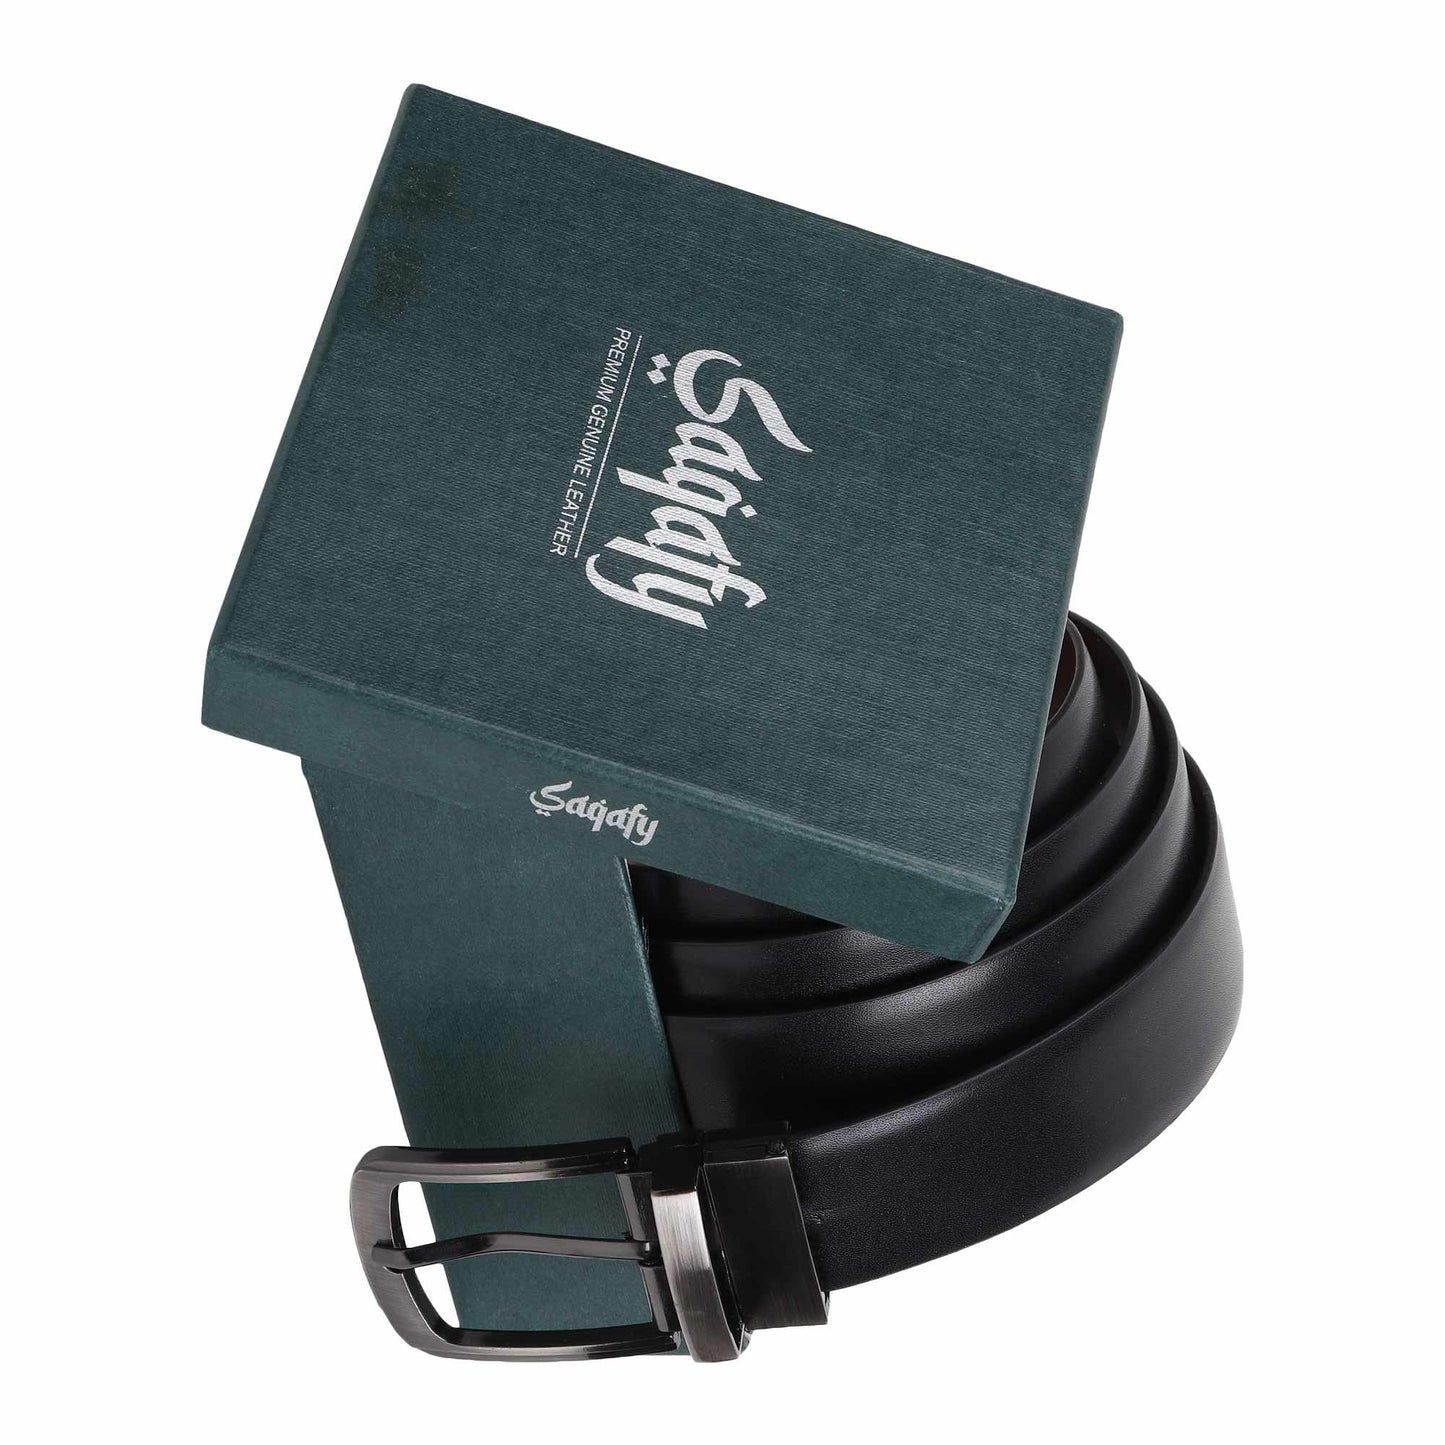 Saqafy Reversible Leather Belt for Men - Faztroo